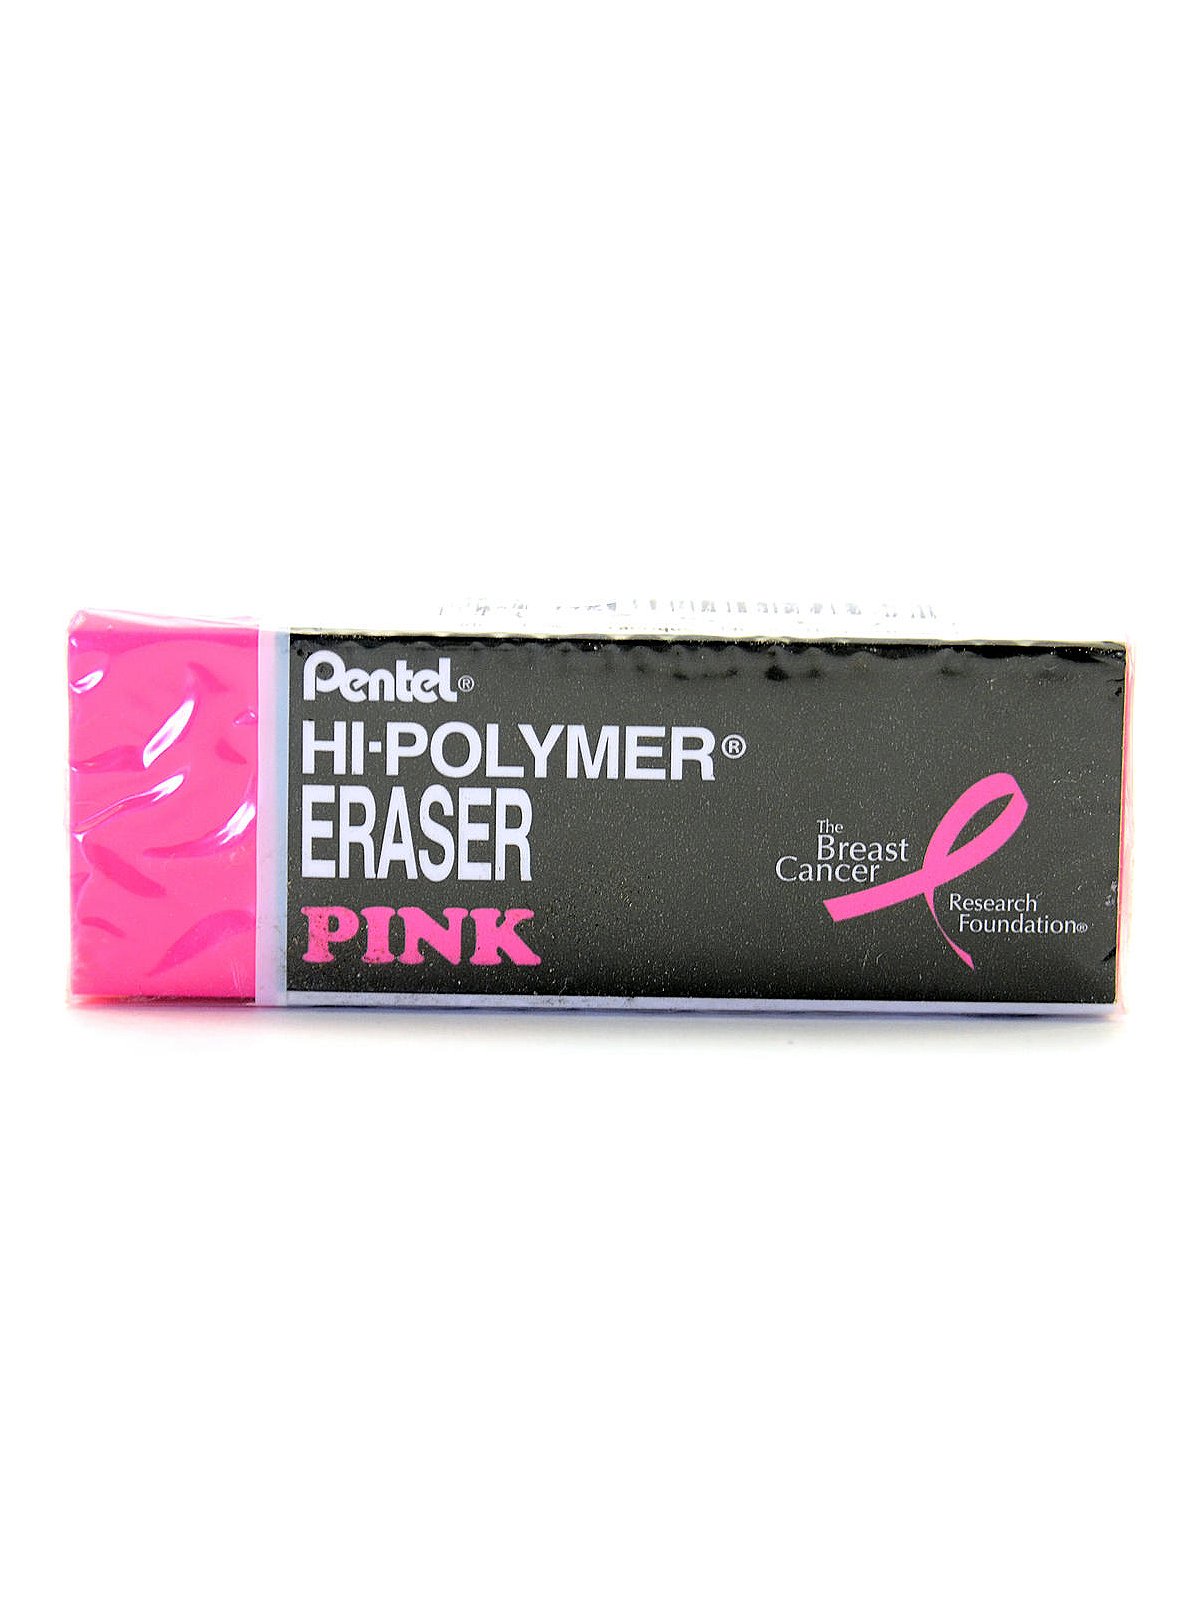 Pentel Hi-Polymer Erasers 